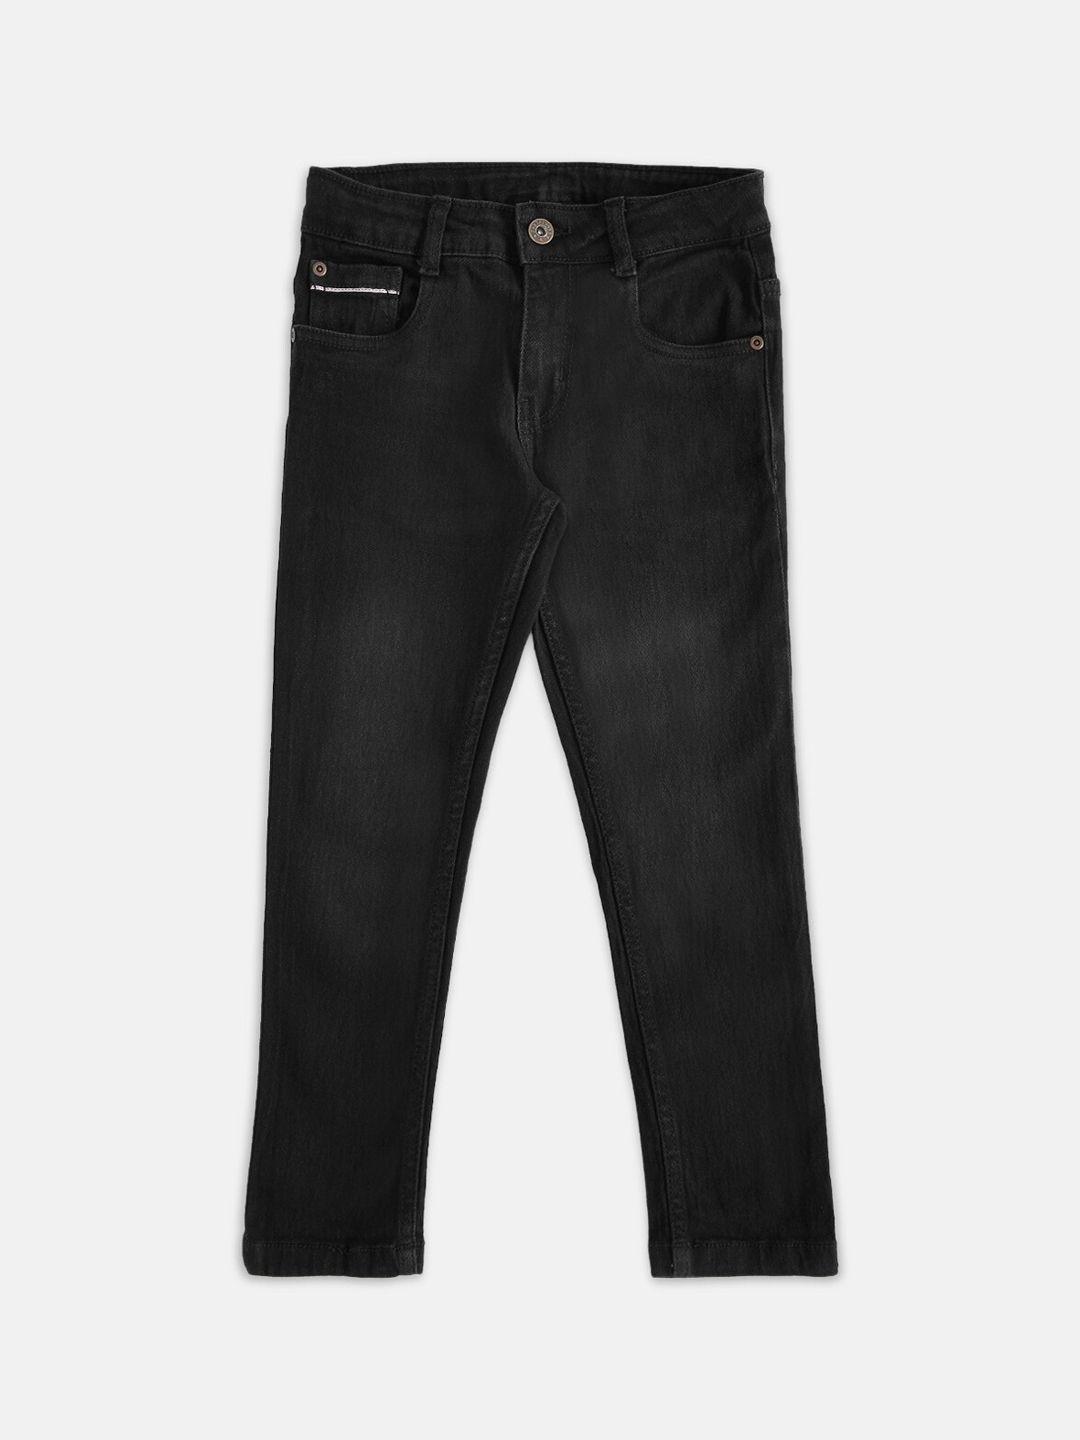 Pantaloons Junior Boys Black Light Fade Cotton Jeans